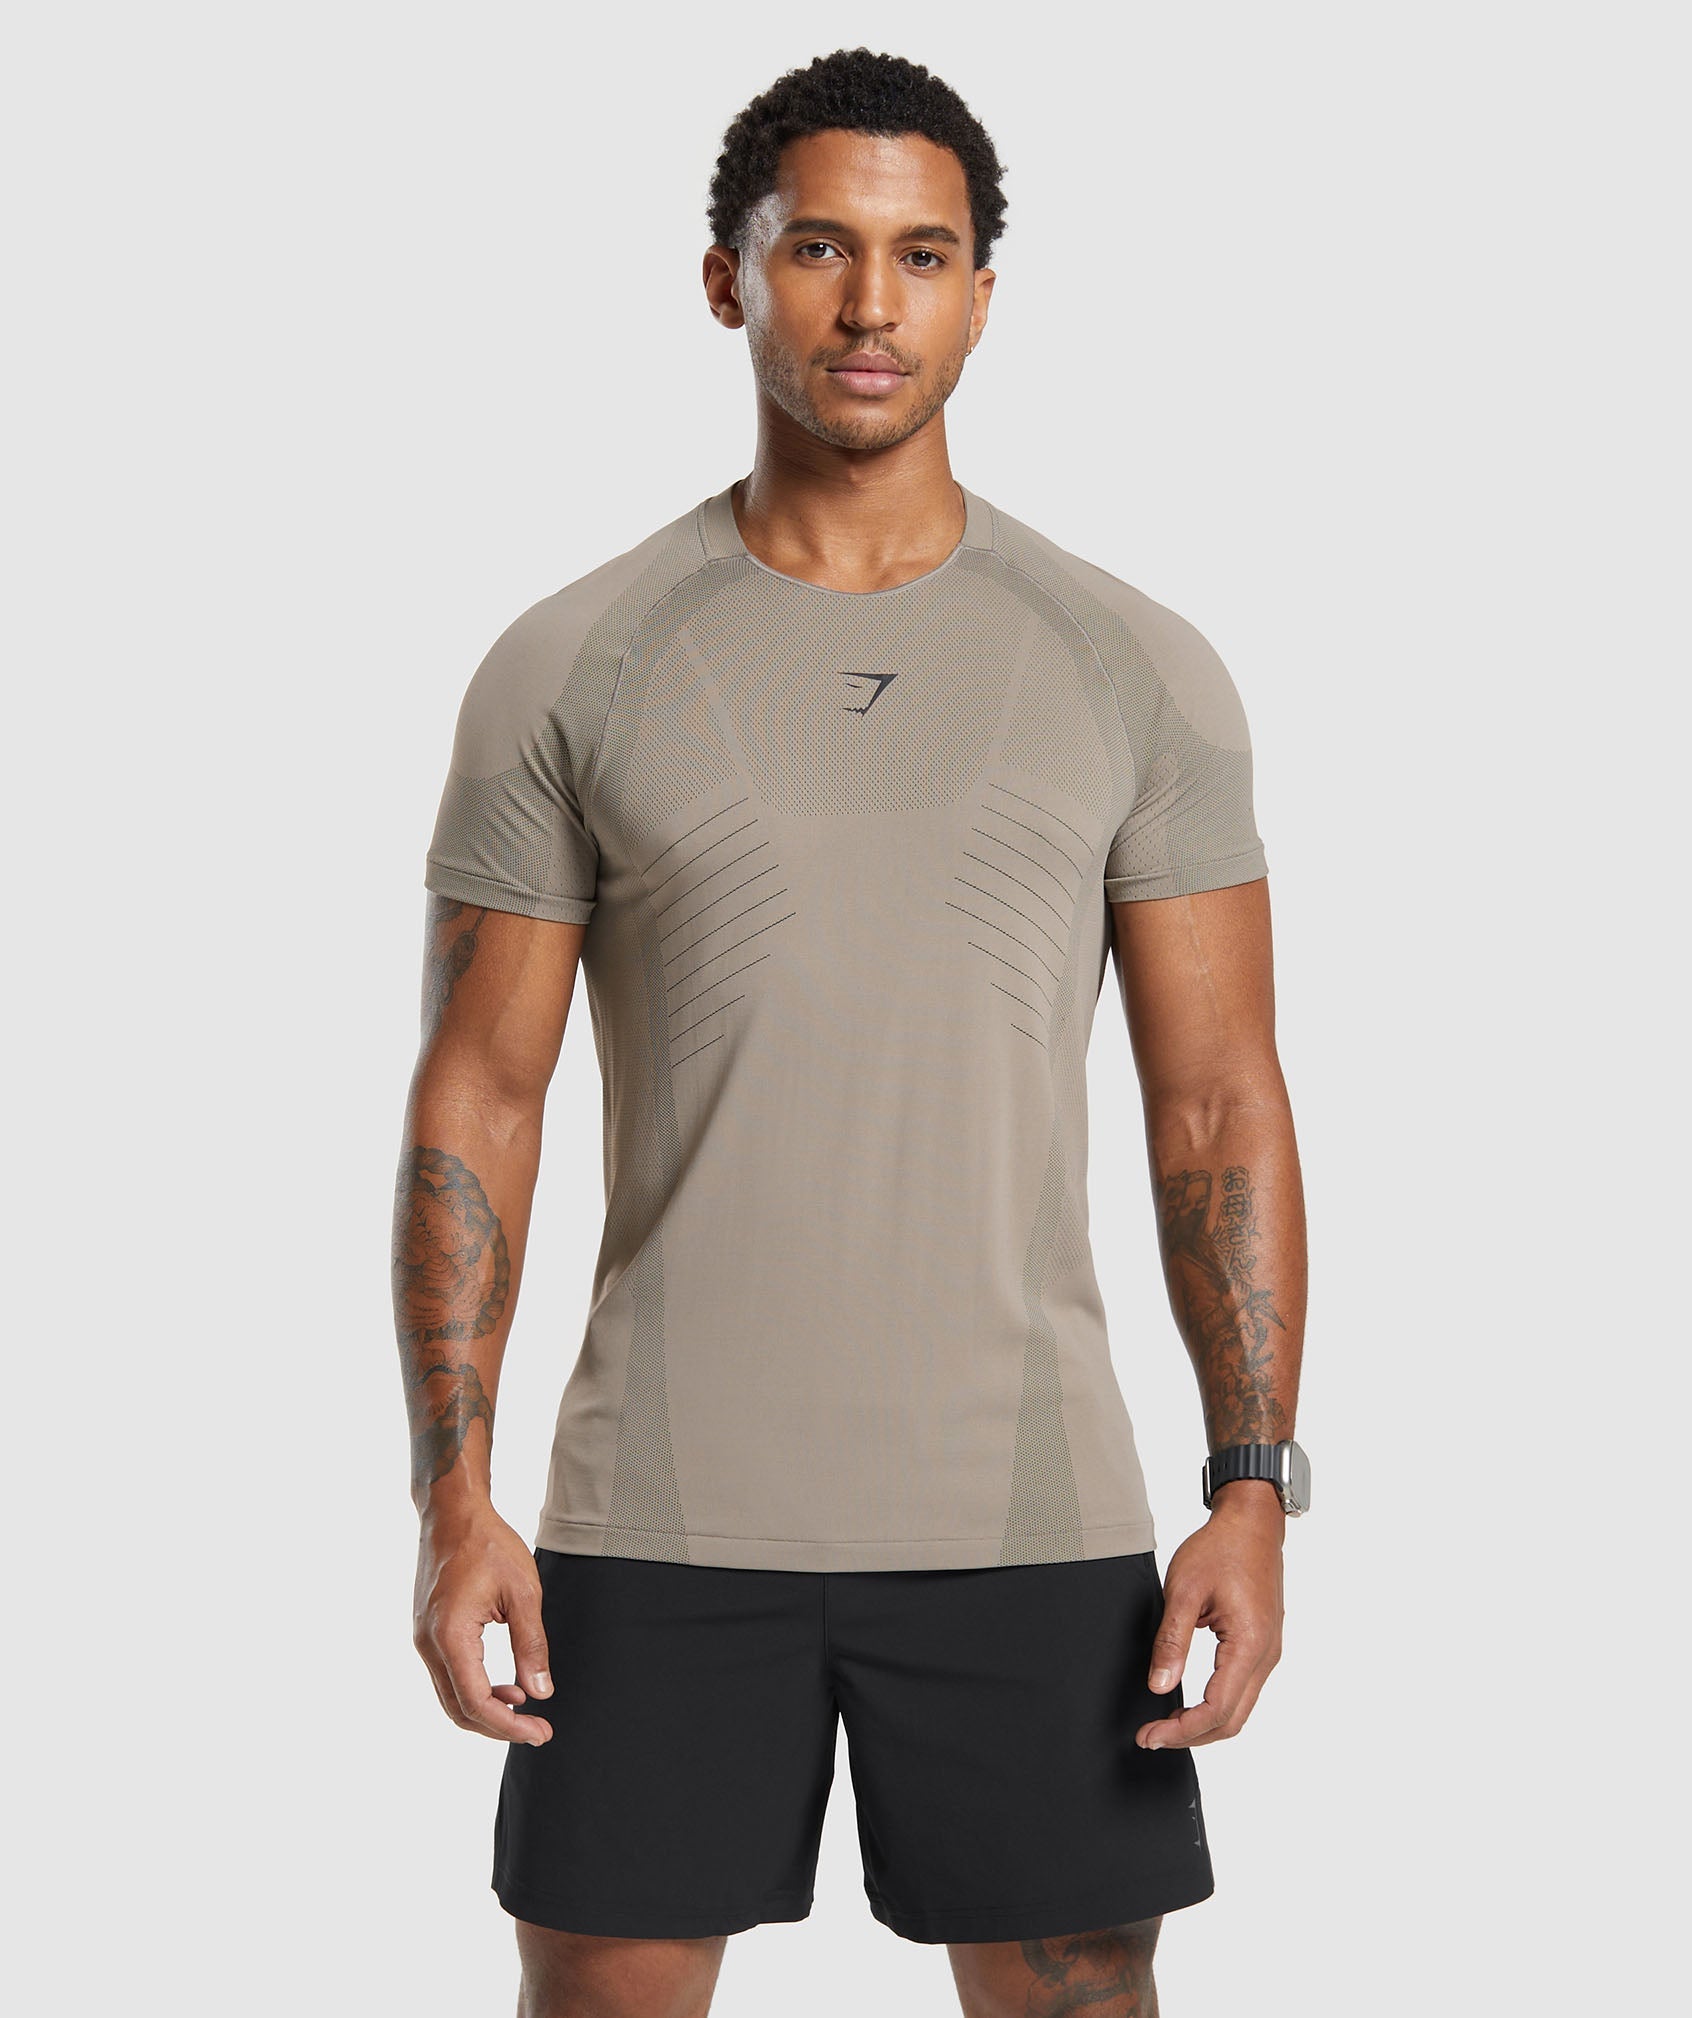 Apex Seamless T-Shirt in Linen Brown/Black